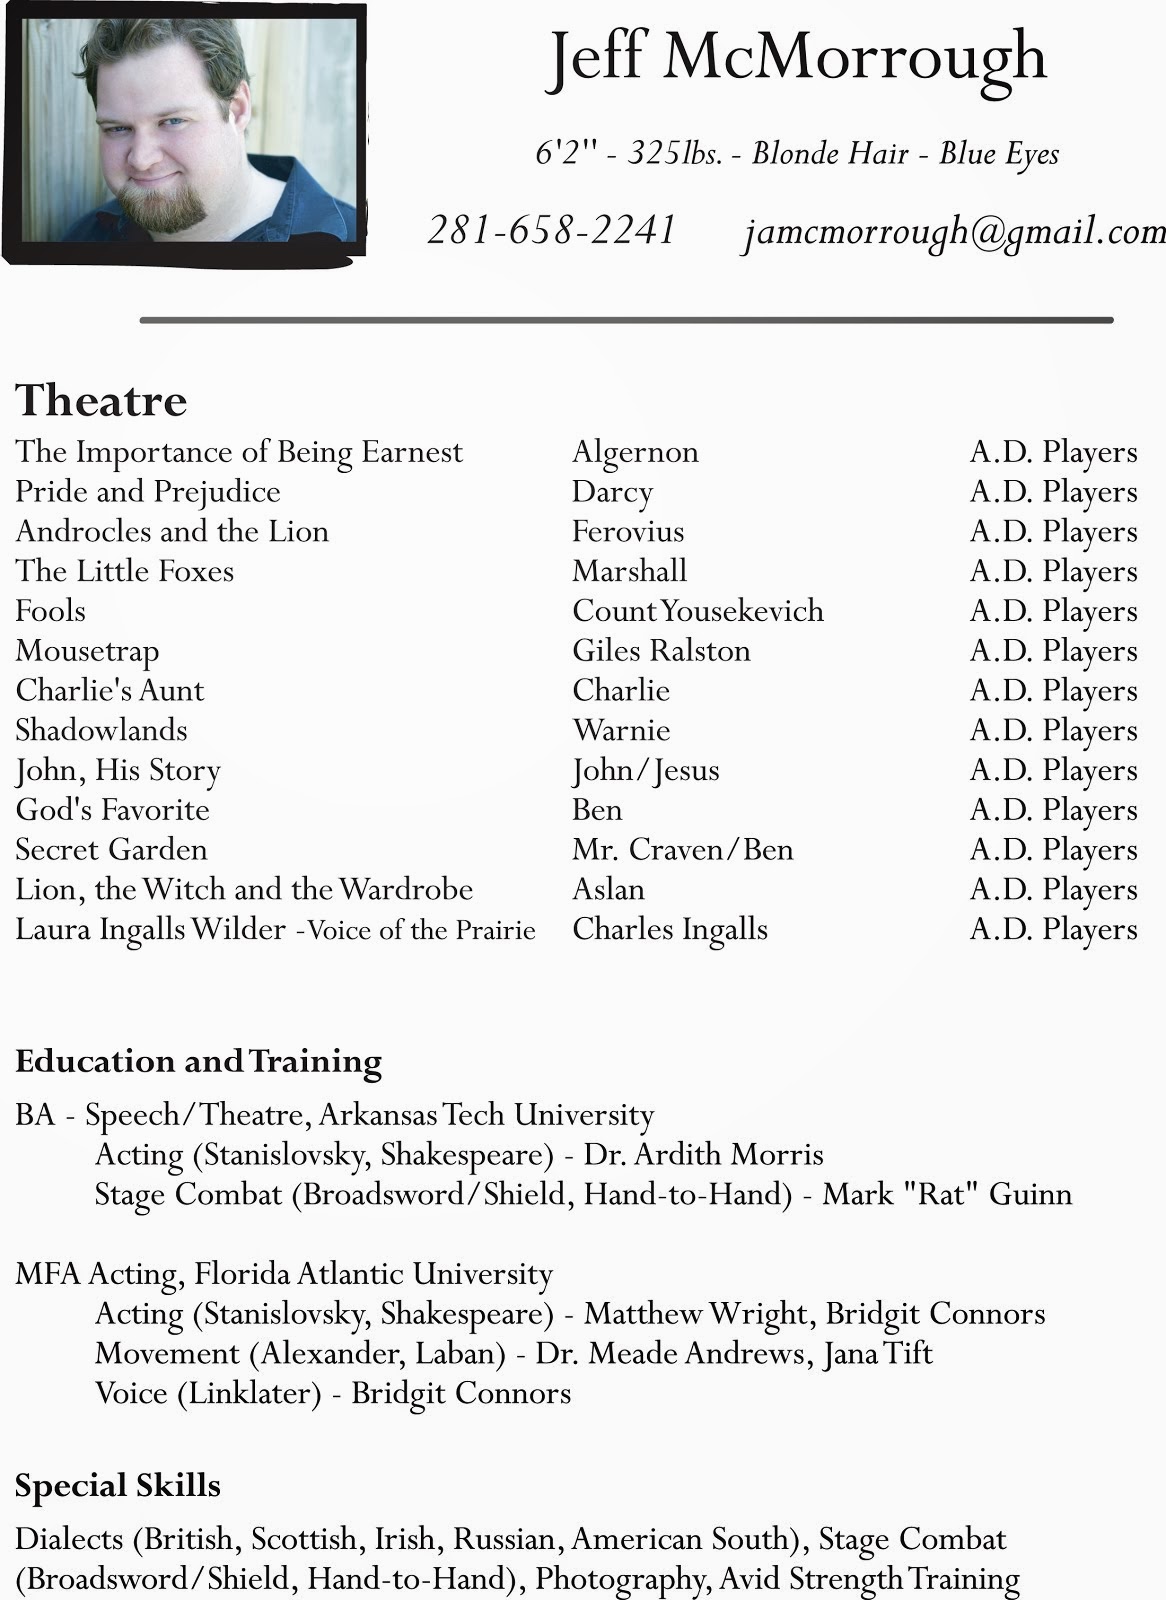 Sample resume theater